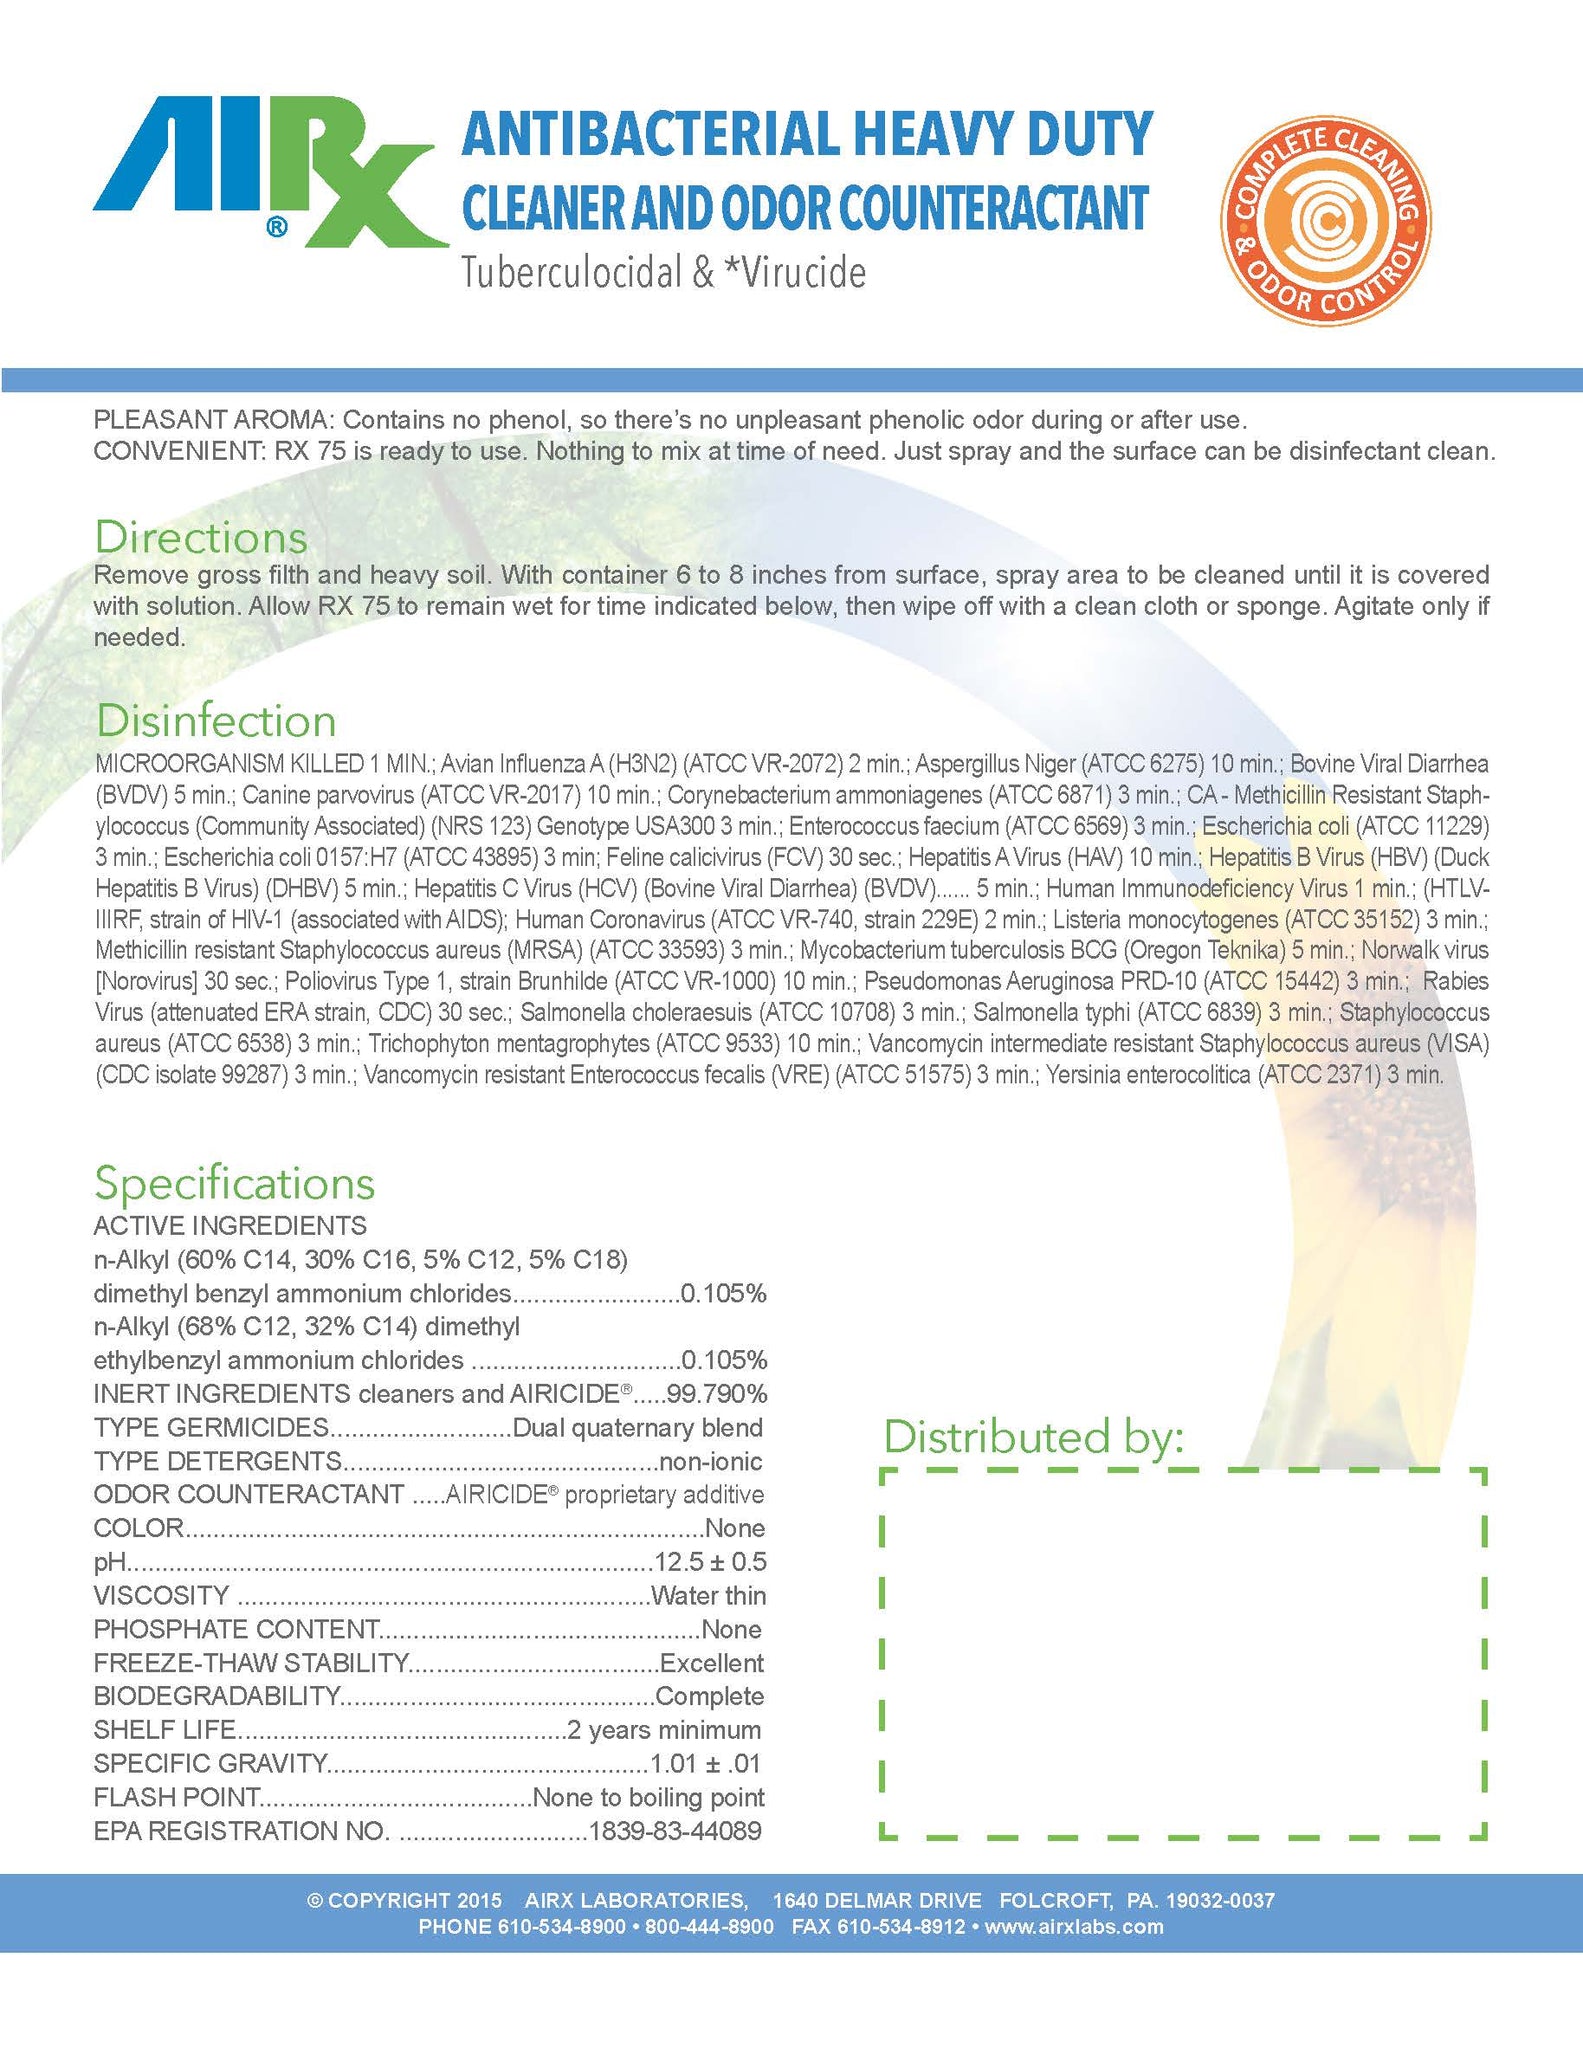 RX75 Antibacterial HD Cleaner & Odor Counteractant 12/32oz cs